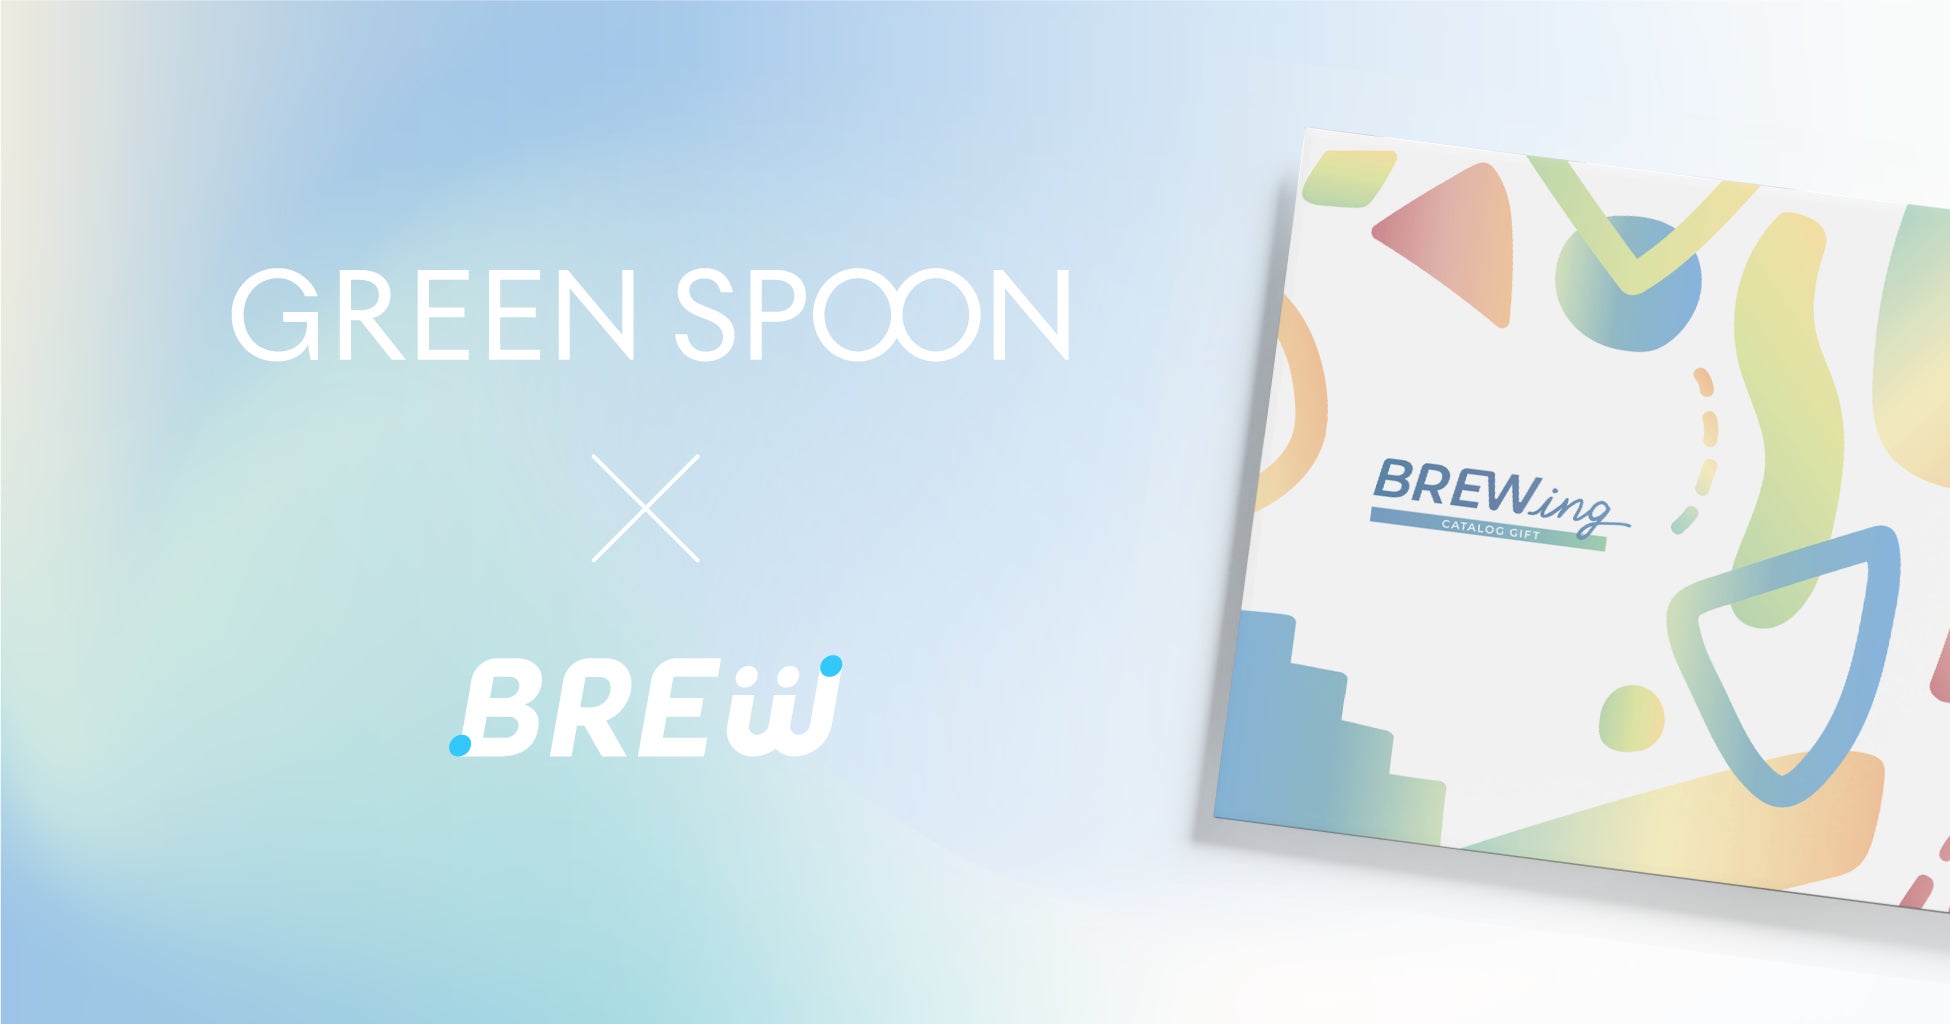 GREEN SPOONがD2Cサービスを集めたカタログギフト「BREWing」に参画